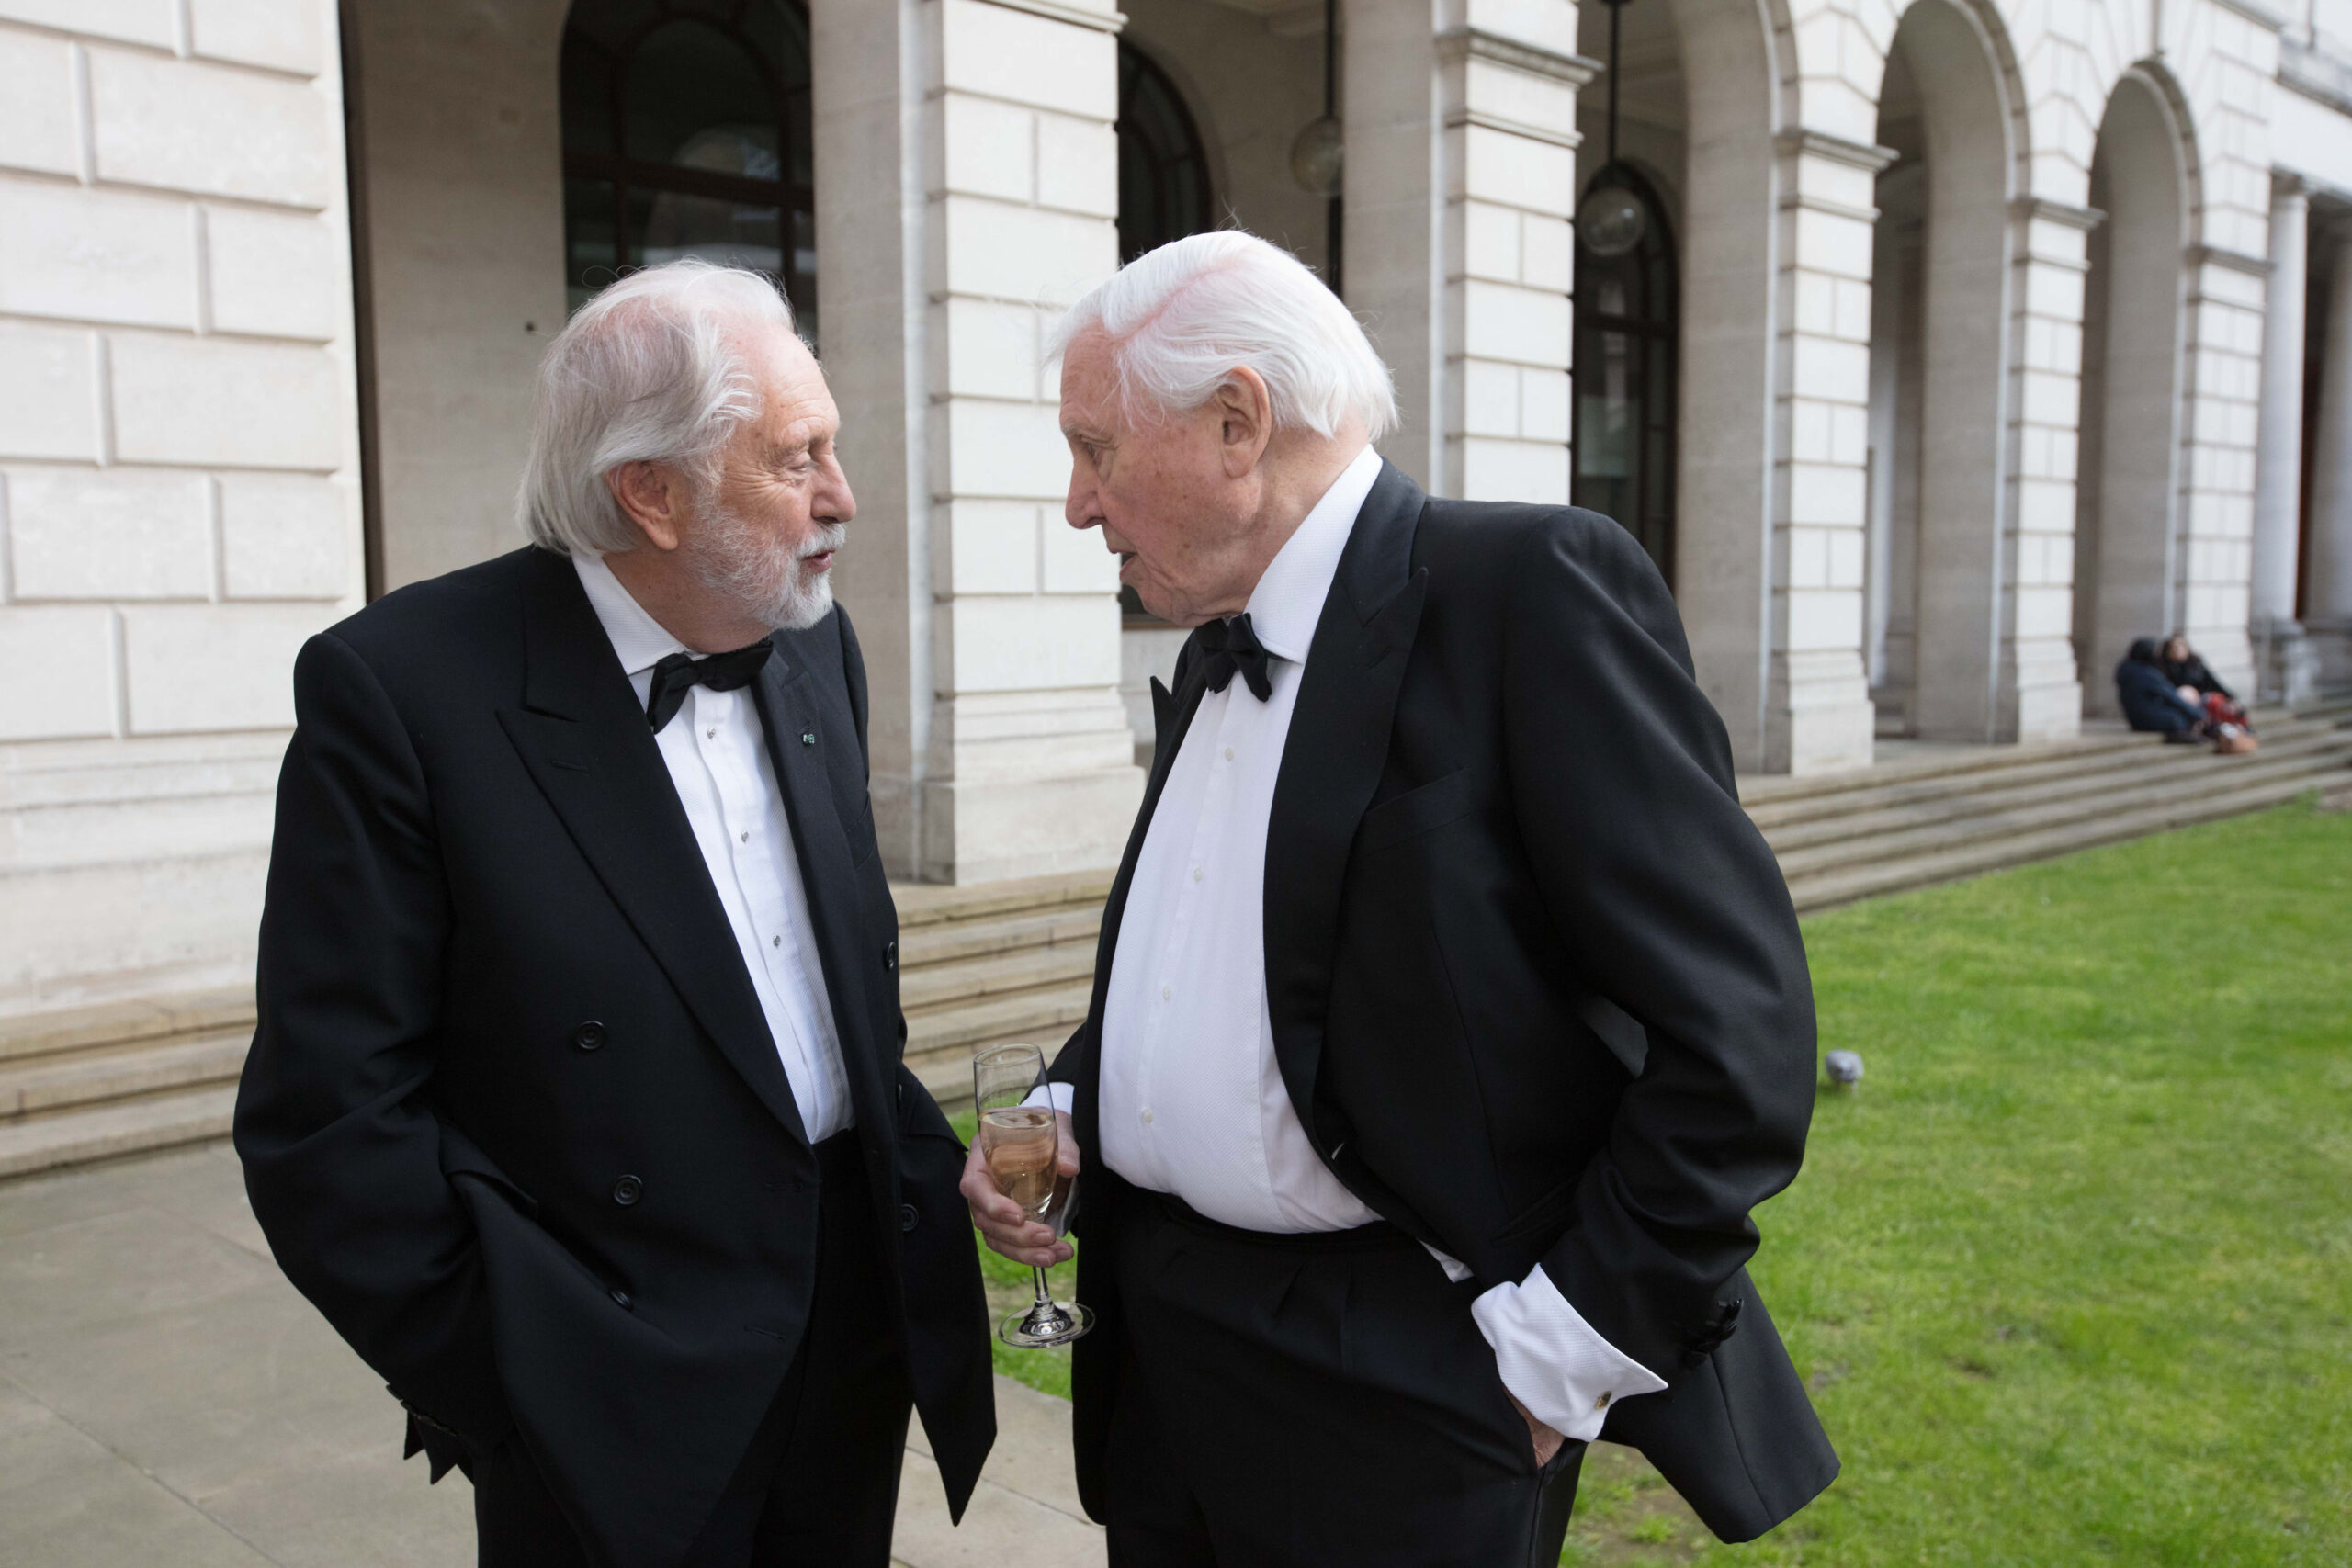 Lord David Puttnam and Sir David Attenborough at OU 50th birthday celebration